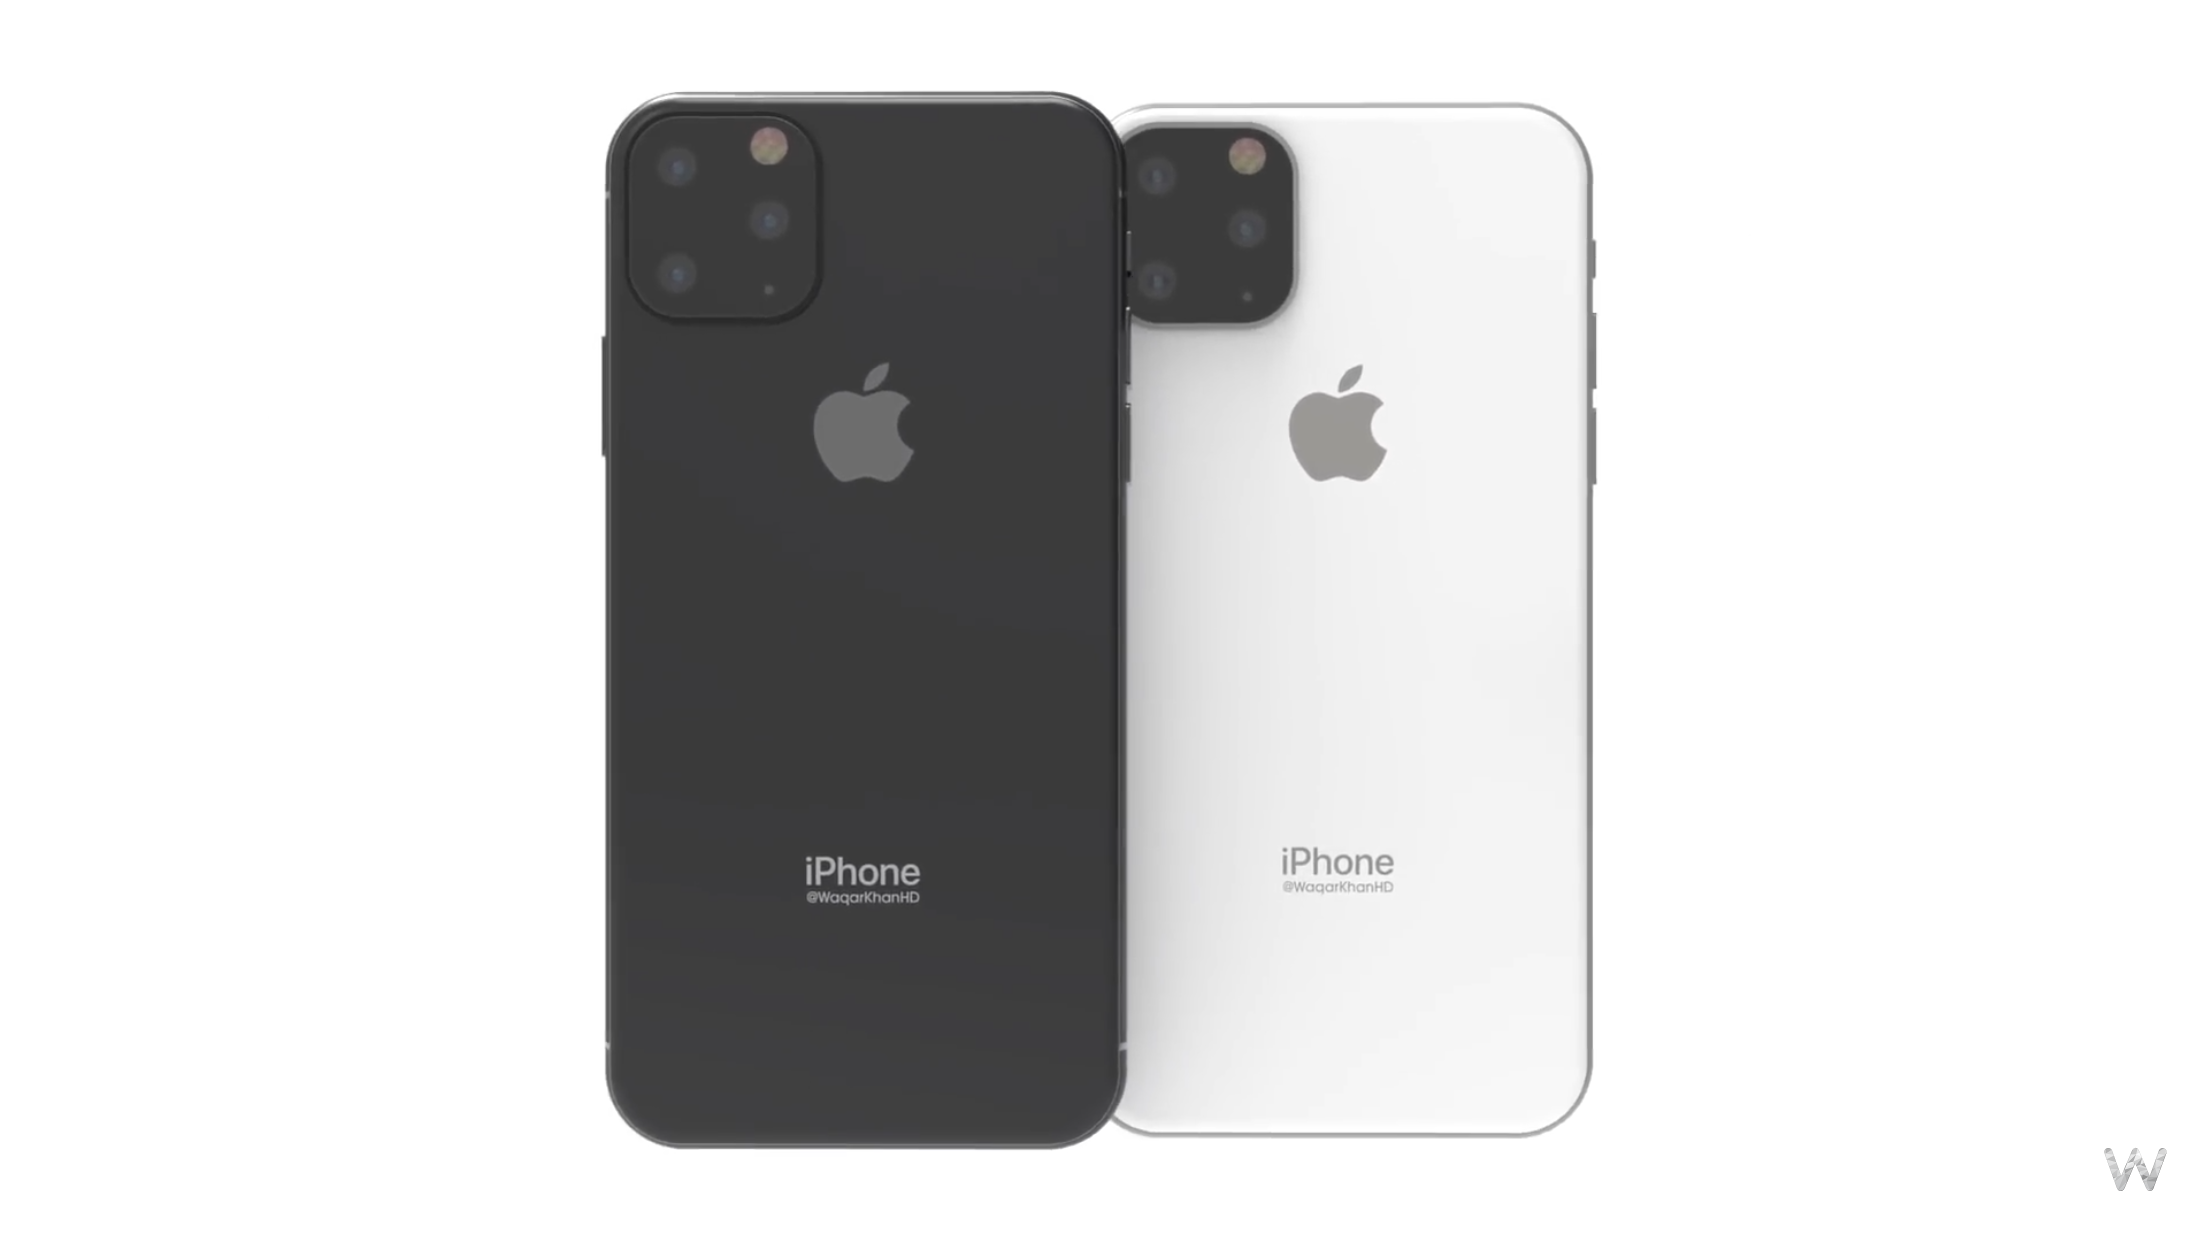 Concept iPhone XI, iphone 2019 concept, iphone 3 camera, thiết kế iPhone XI 2019, mô hình iphone mới, apple a13 bionic, chip a13, thiết kế iphone 2019, iphone 3 cam vs huawei mate 20 pro, so sánh iphone 2019